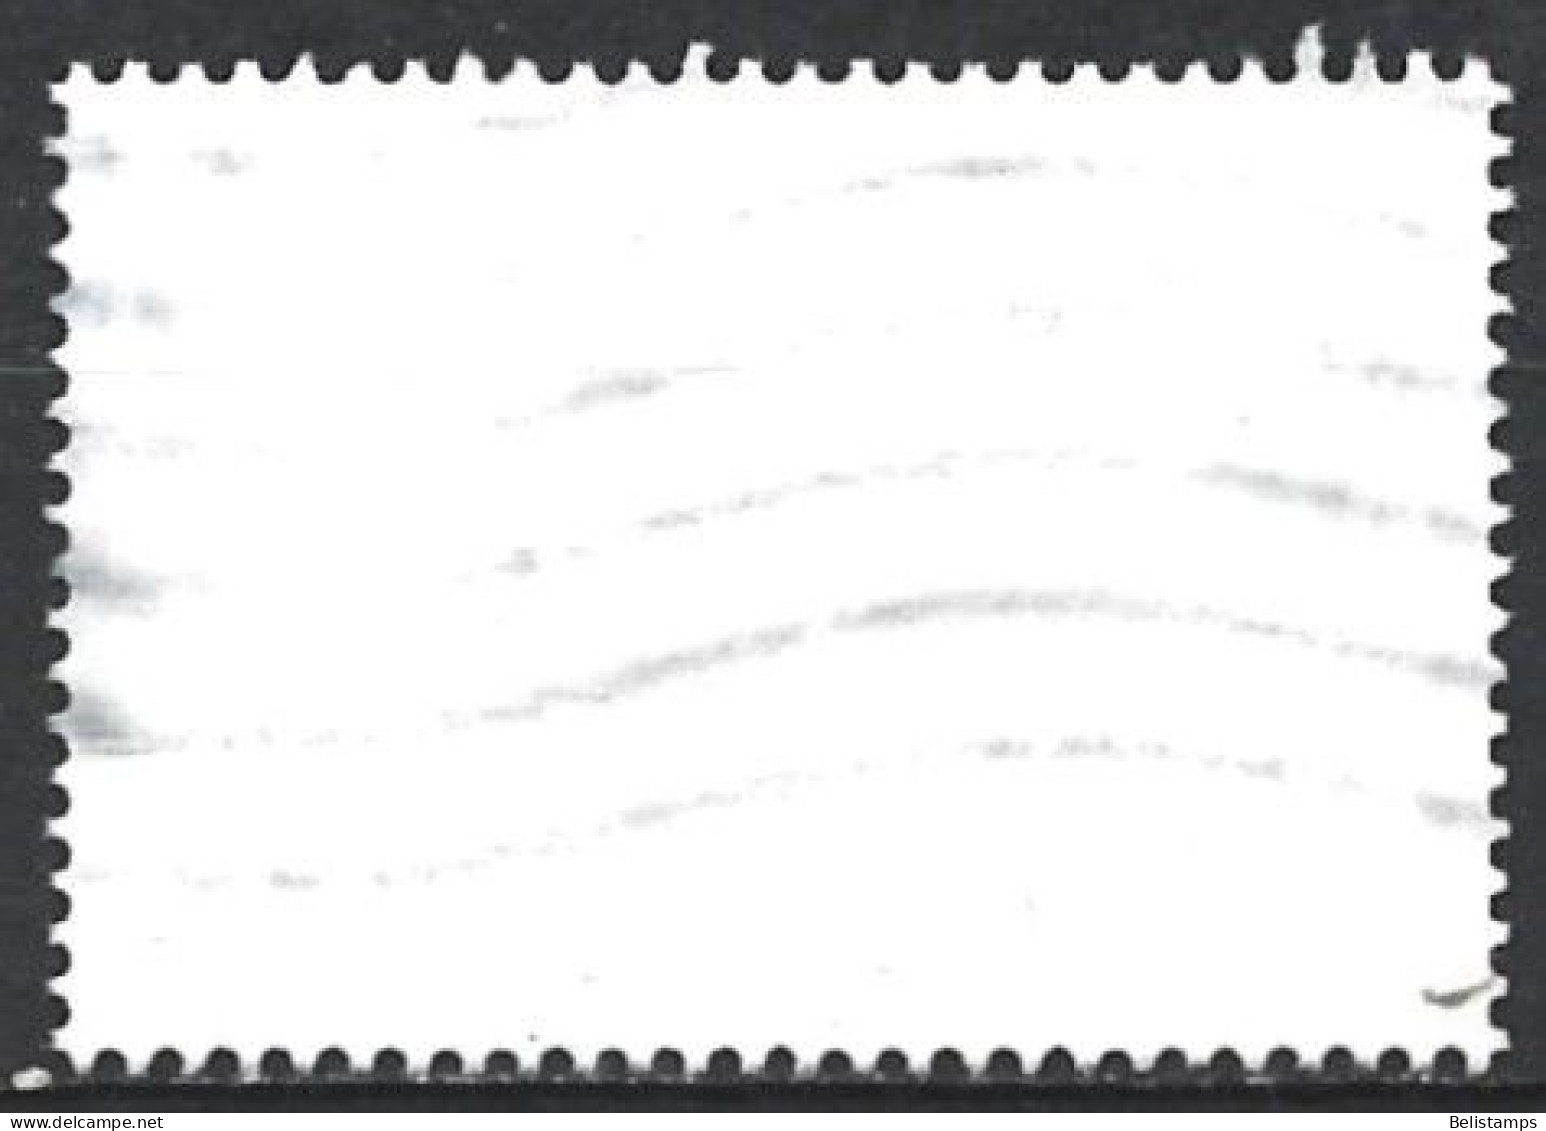 Australia 2023. Scott #5638 (U) Native Mammal, Bilby - Used Stamps